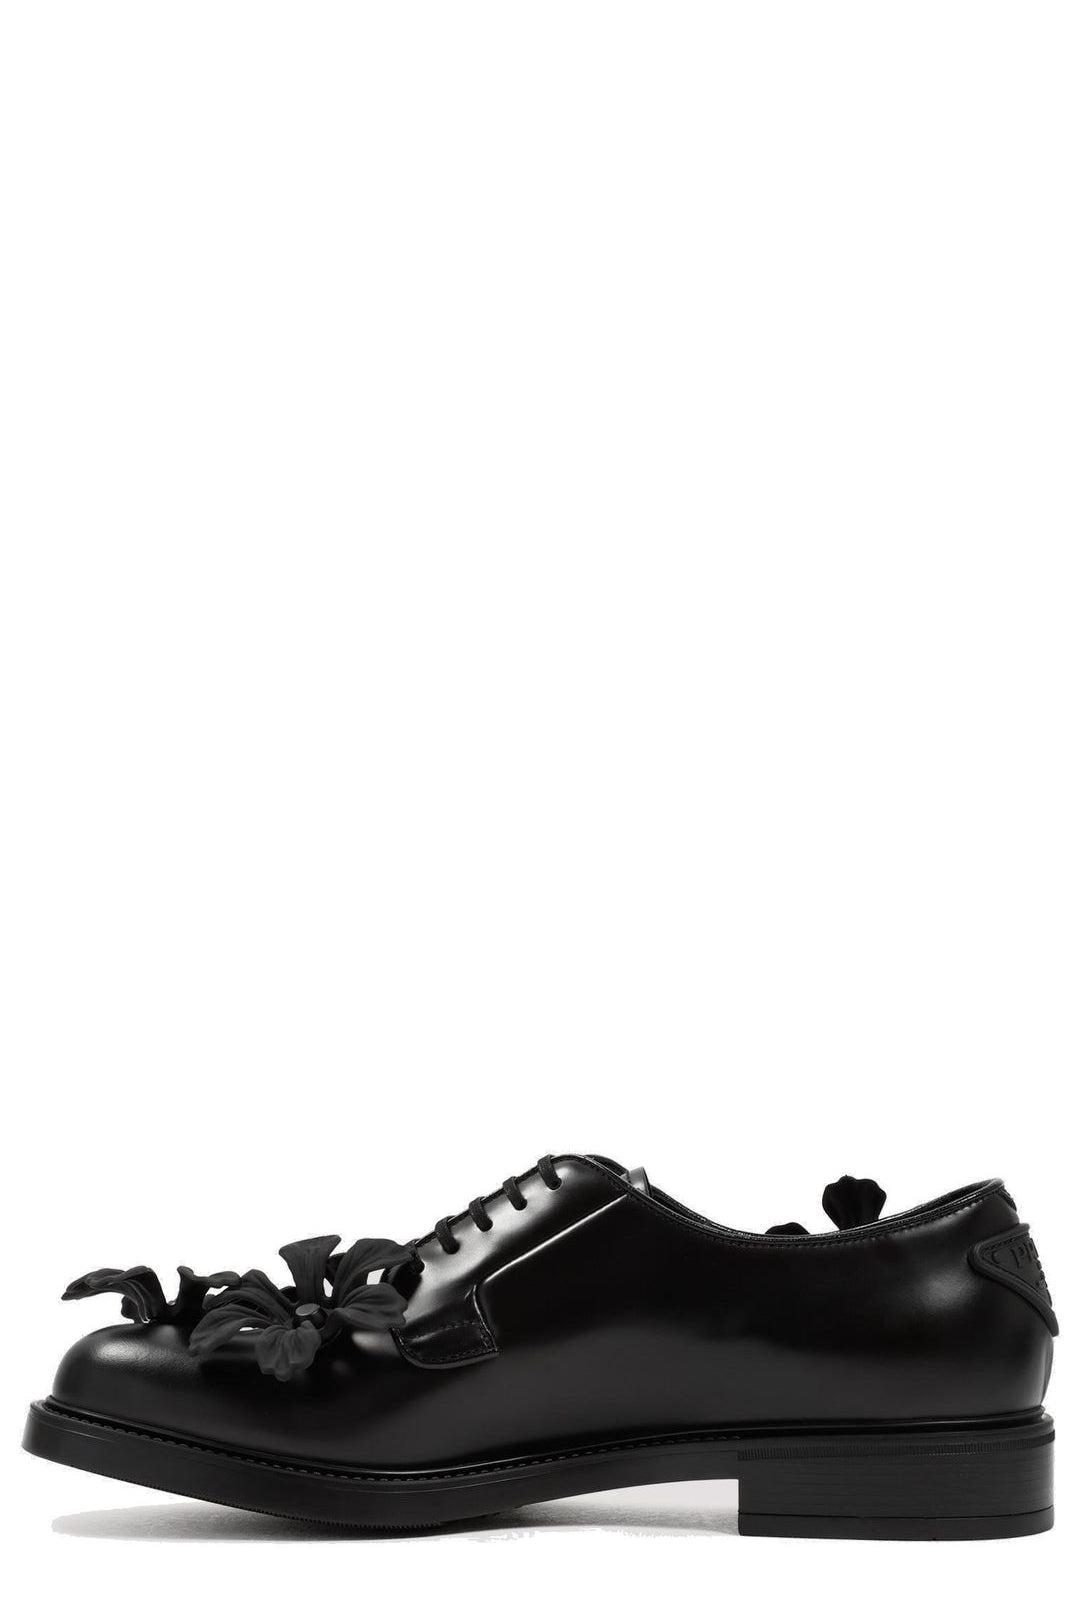 Prada Leather Floral Appliqué Derby Shoes in Black for Men | Lyst